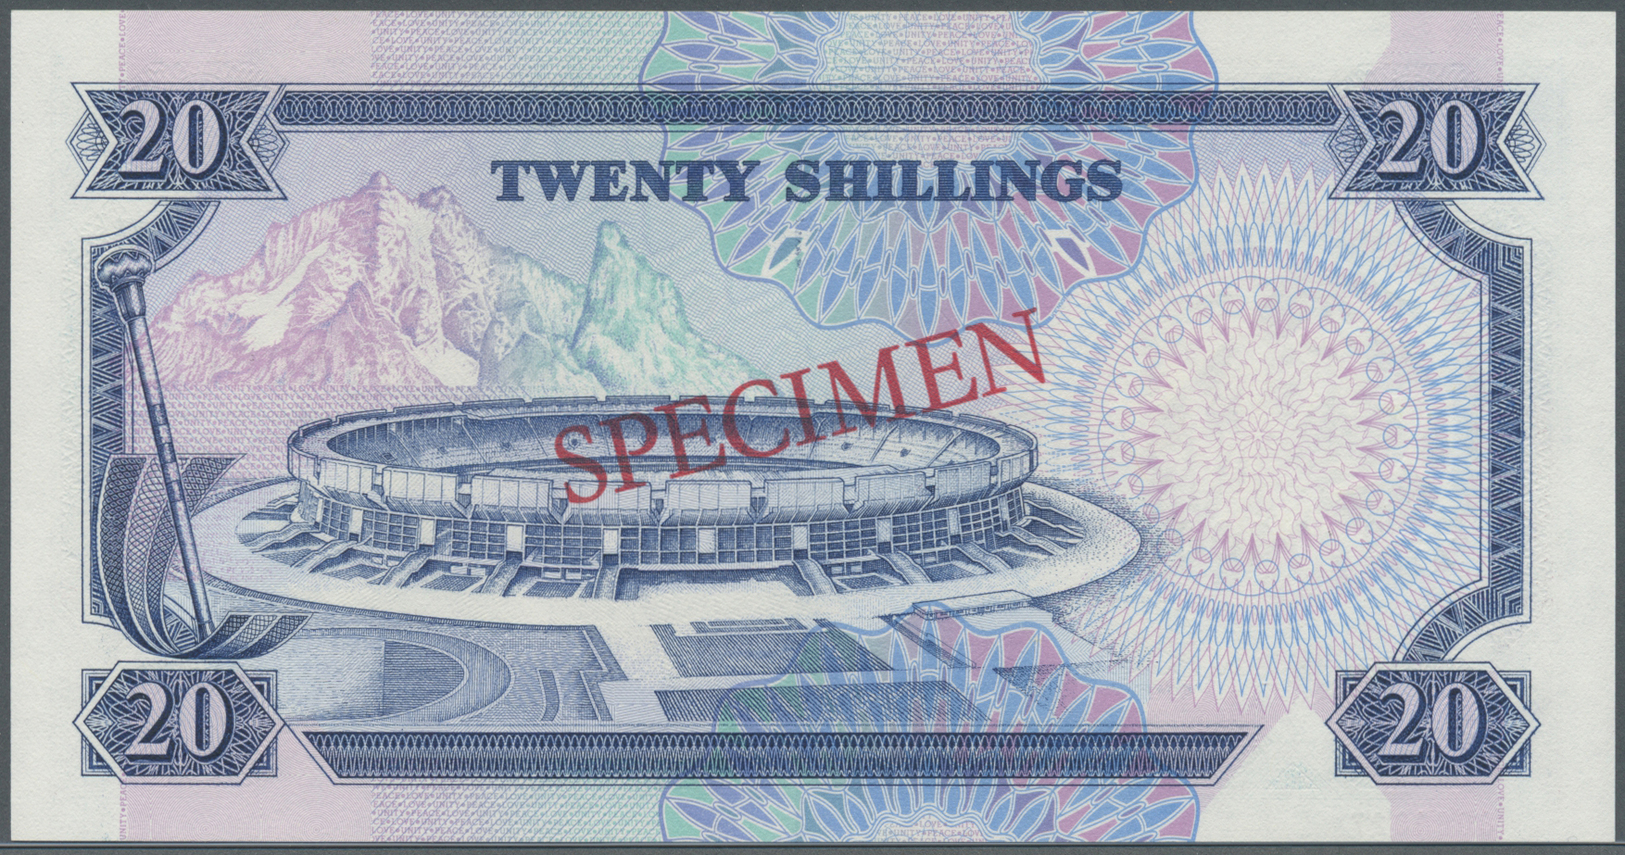 01350 Kenya / Kenia: 20 Shillings 1992 Specimen P. 25s In Condition: UNC. - Kenya